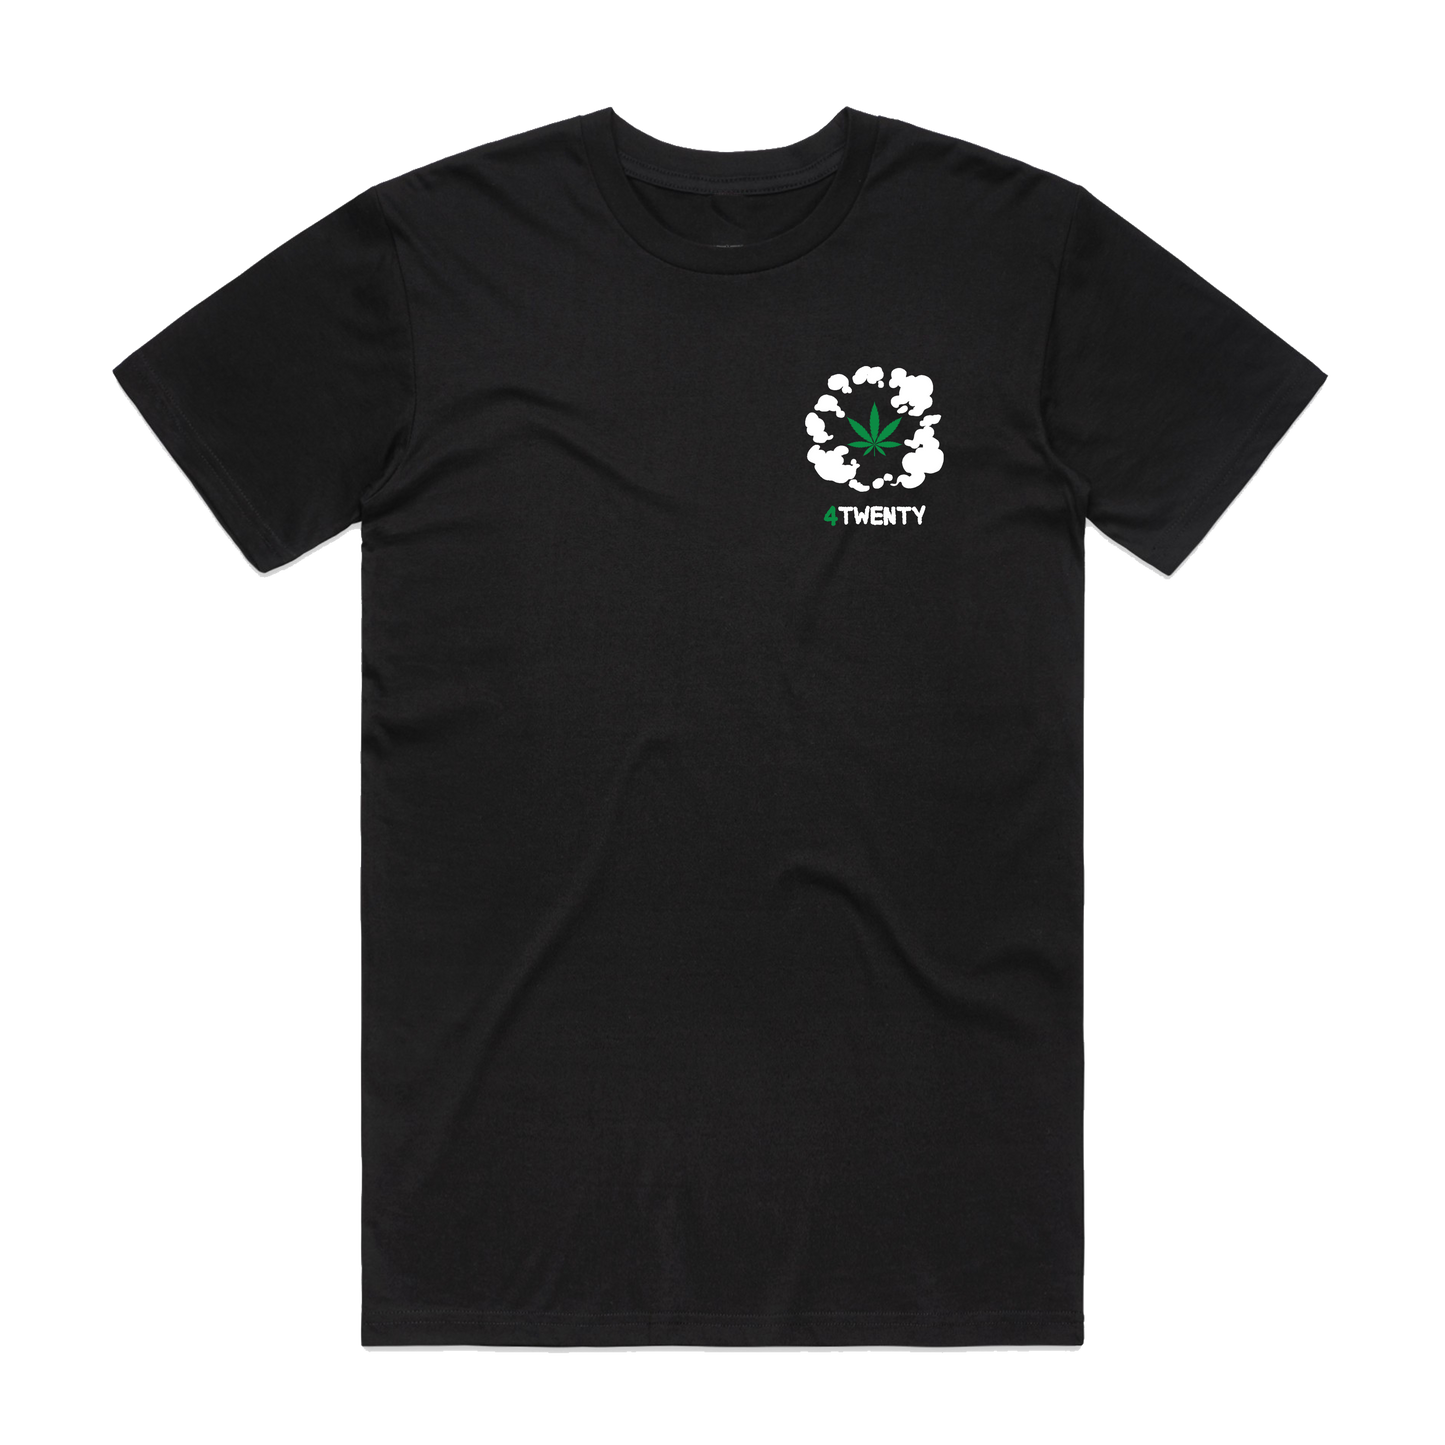 Mental Relaxation Unisex T-Shirt - Black